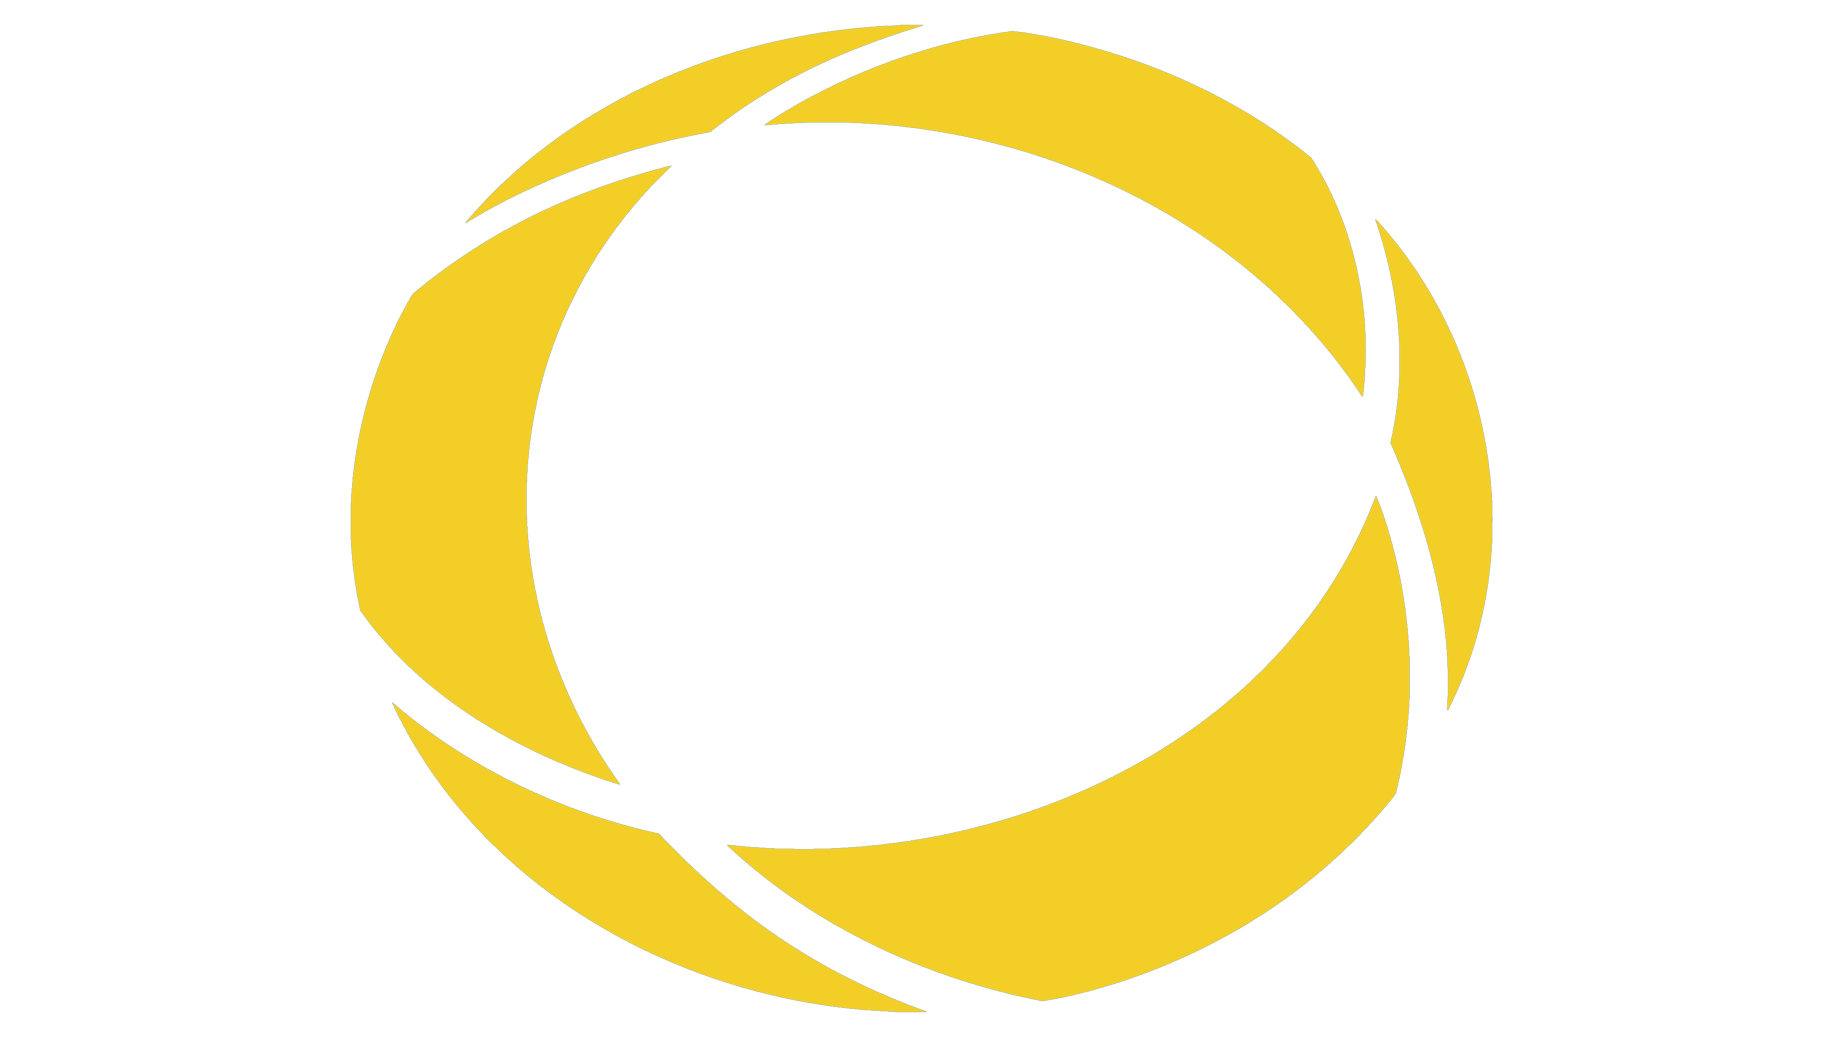 Huntsman world senior games logo